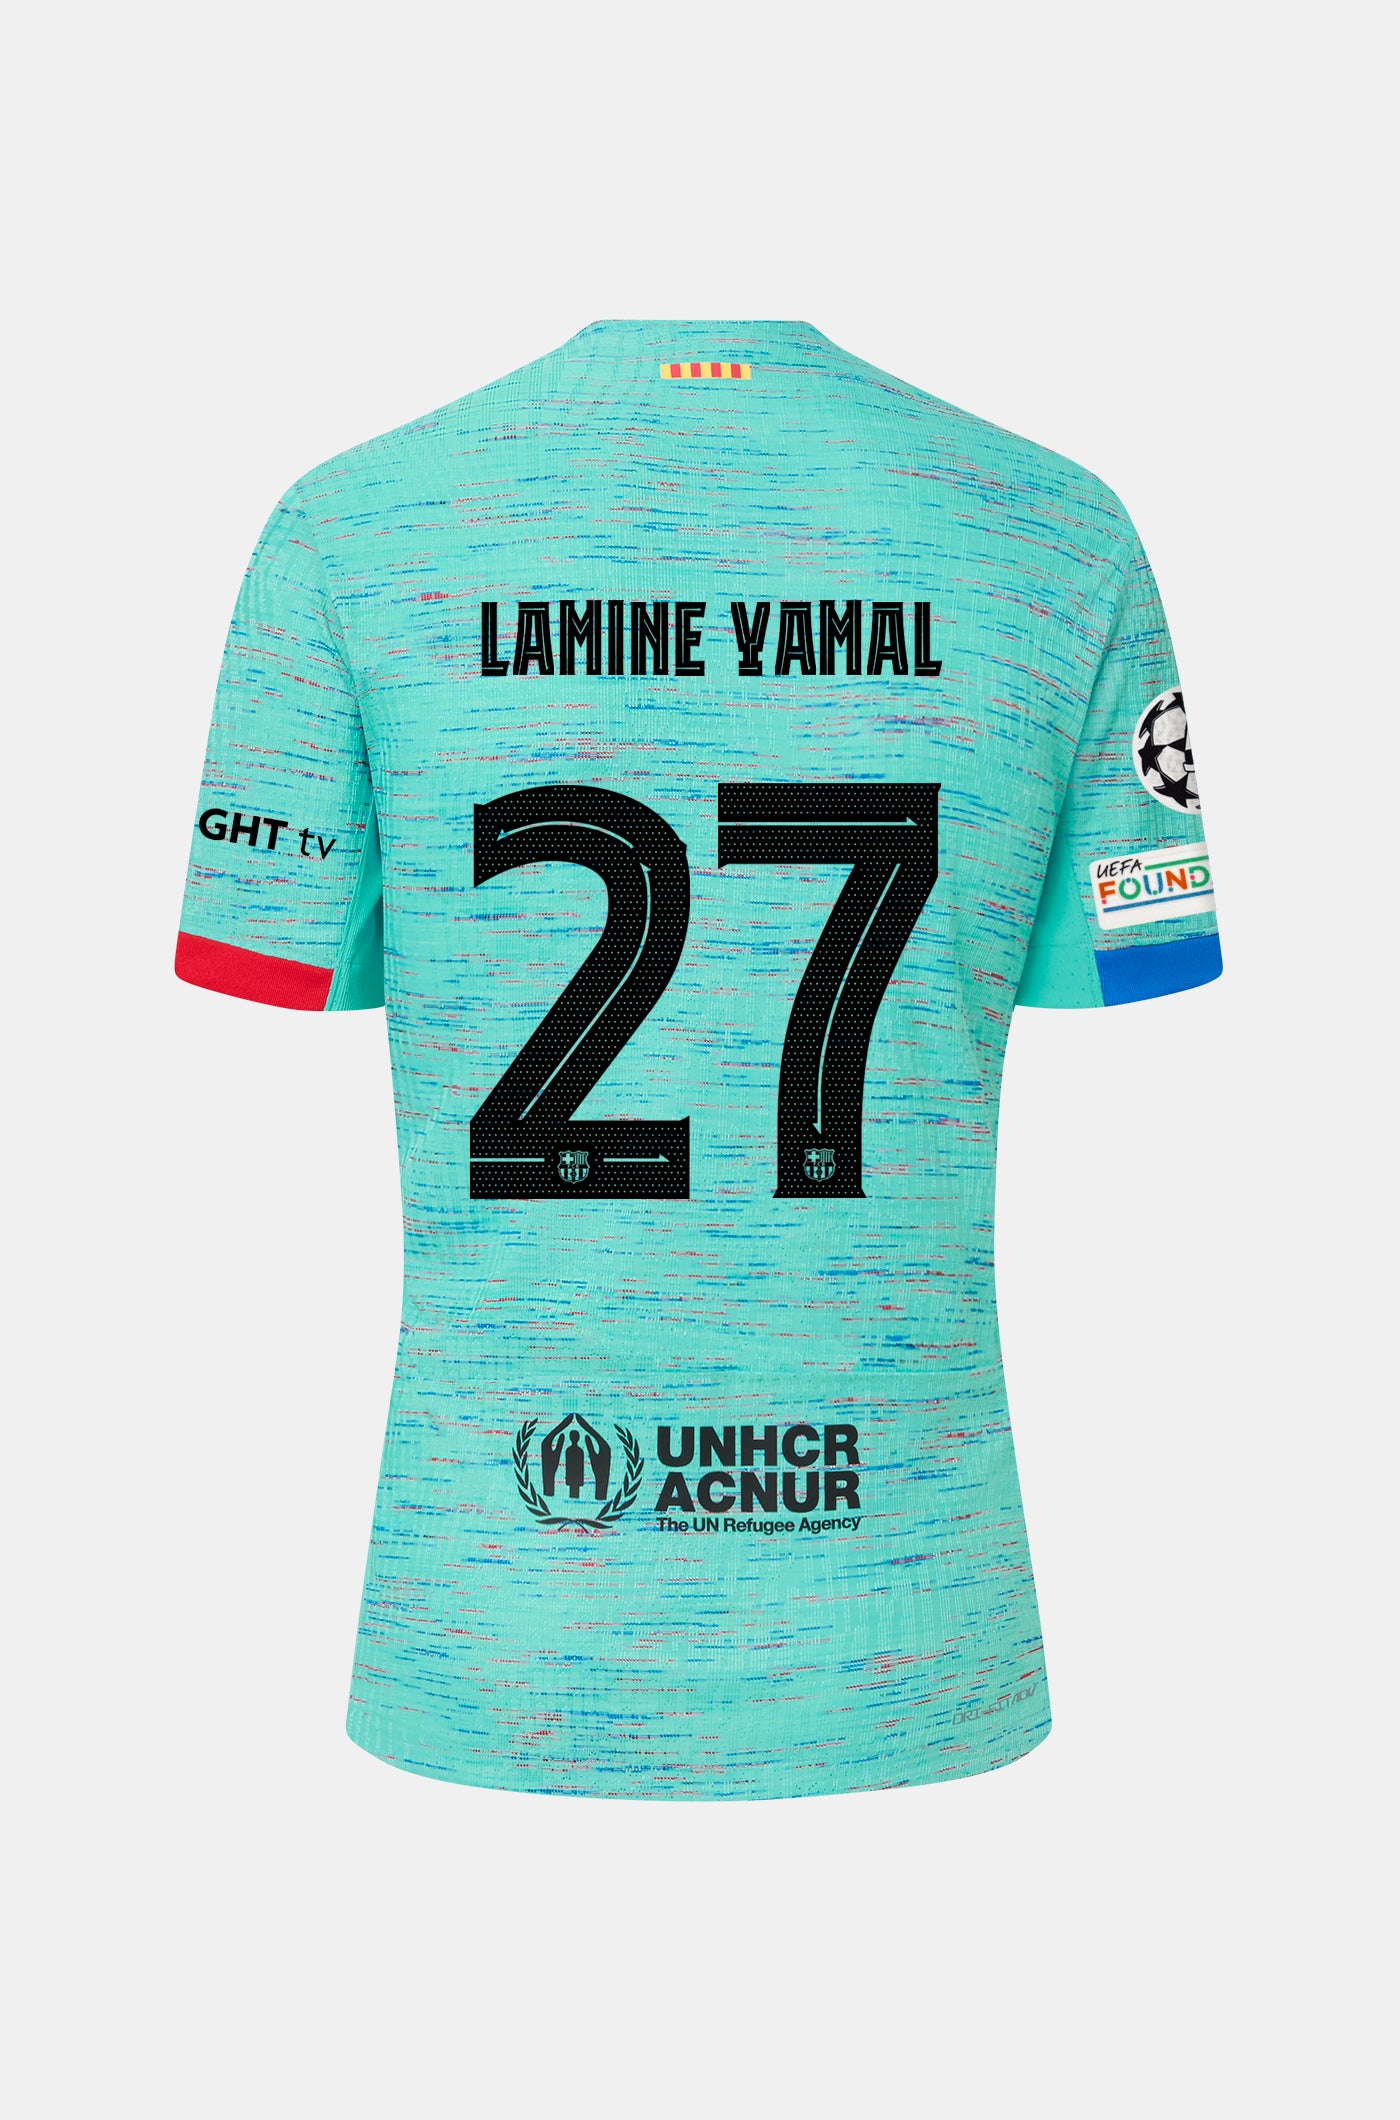 UCL FC Barcelona third shirt 23/24 - Women  - LAMINE YAMAL